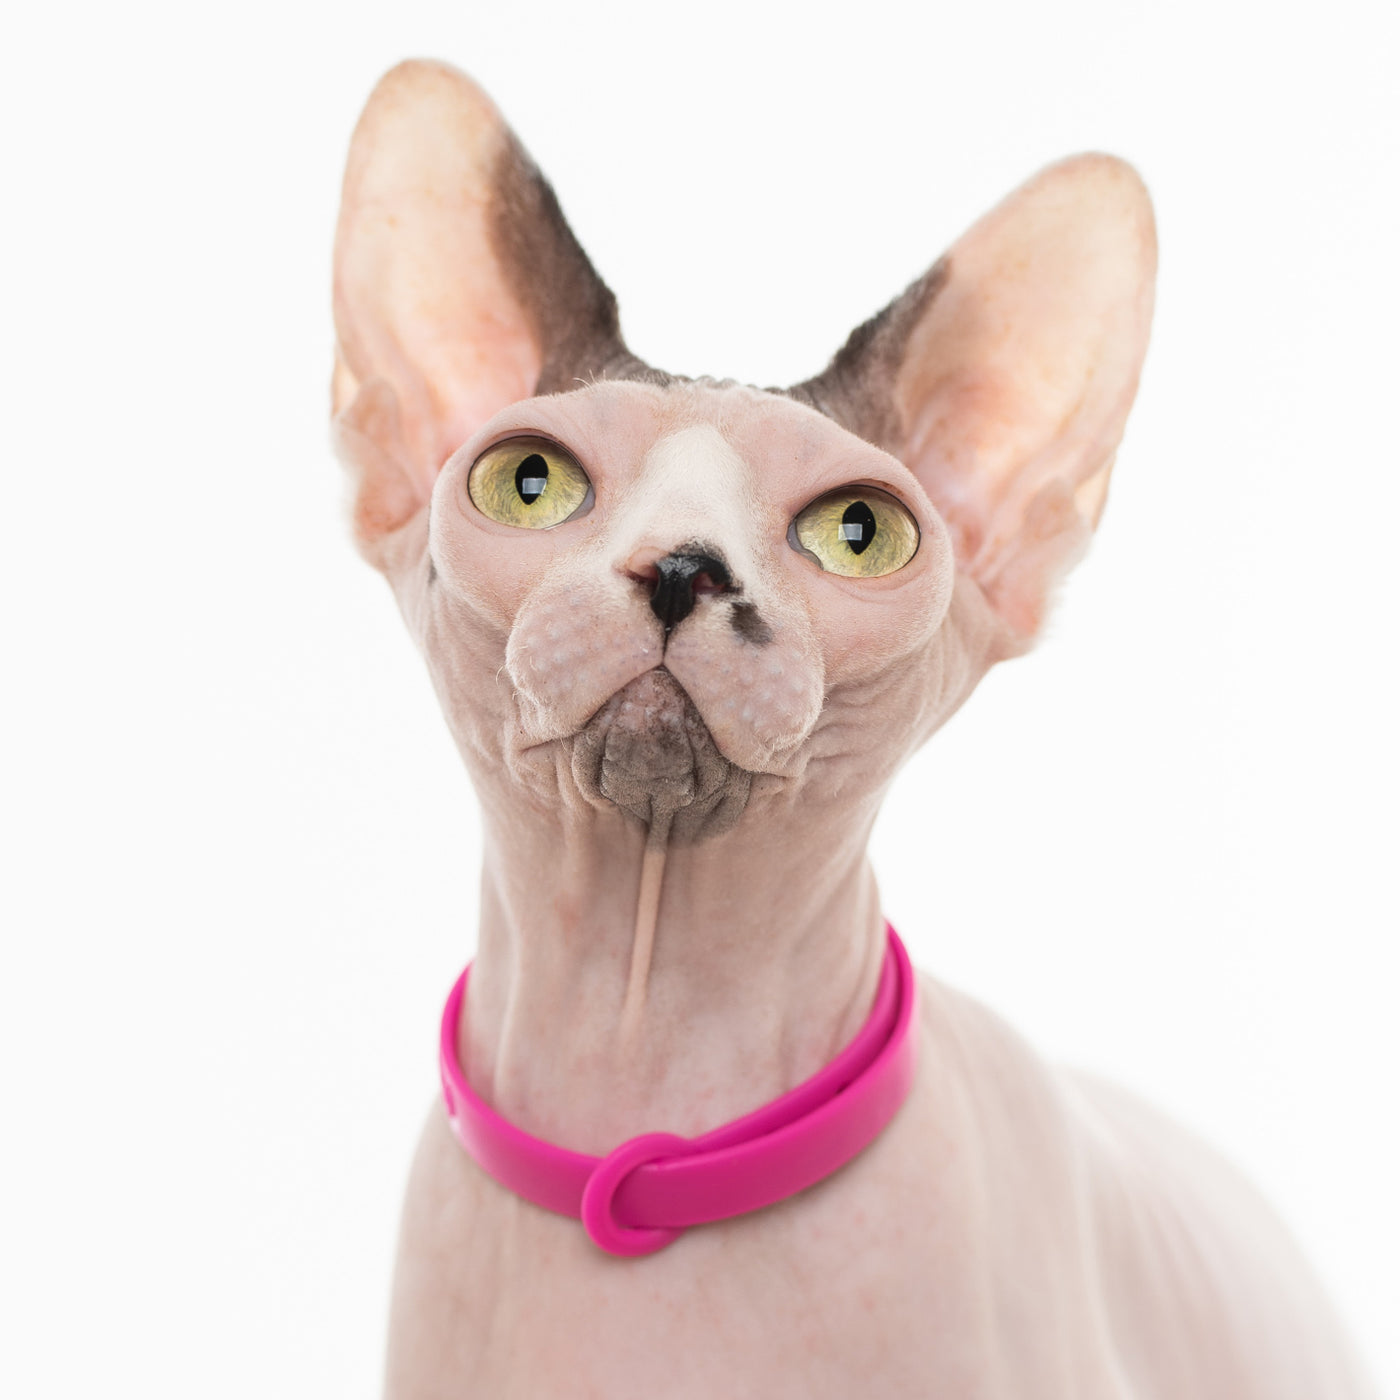 Sphynx cat wearing pink collar